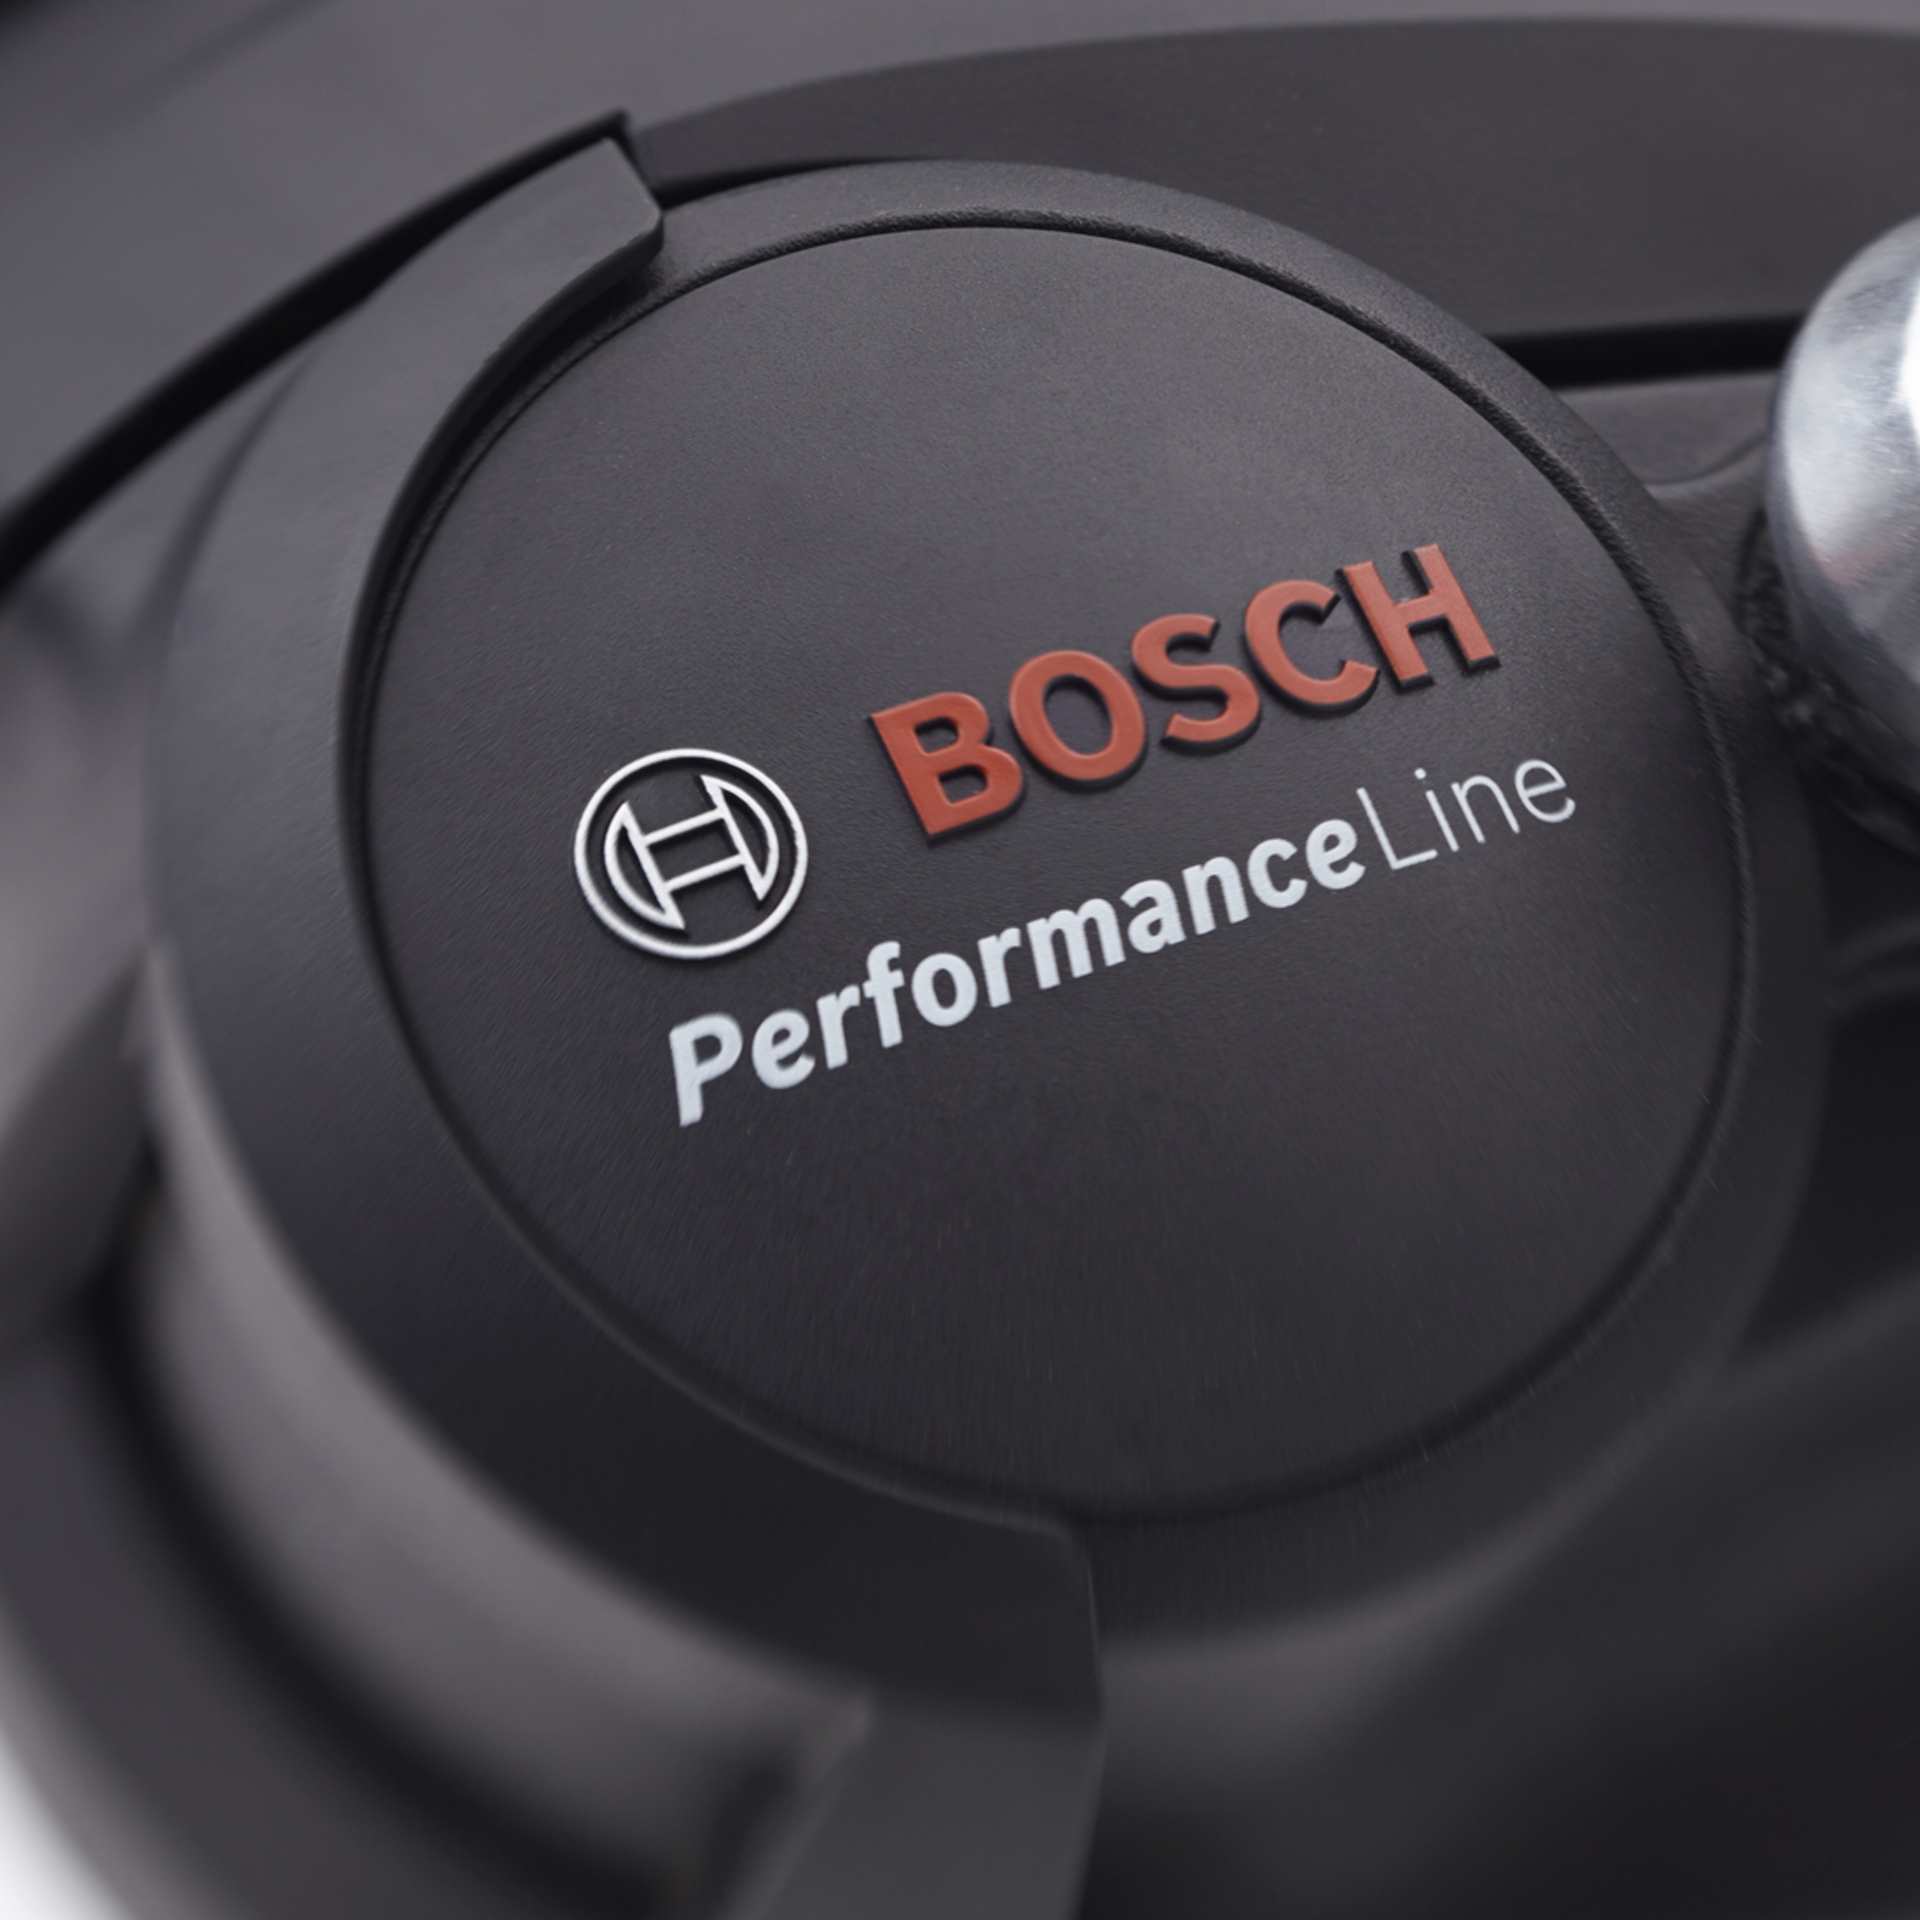 Bosch Performance Line